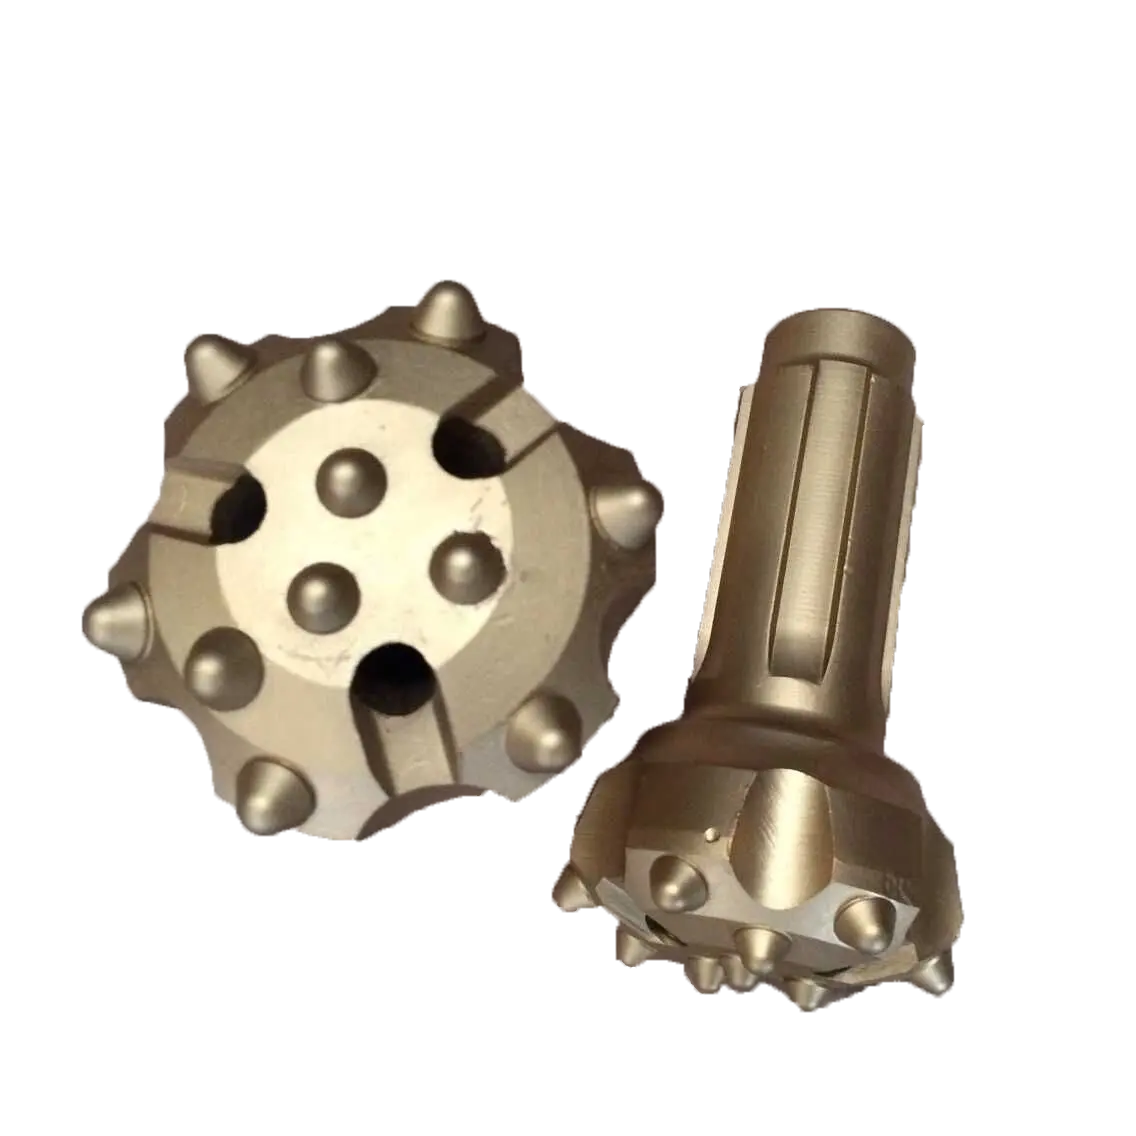 100mm-CIR90 dth drill bit with high quality tungsten carbide insert button